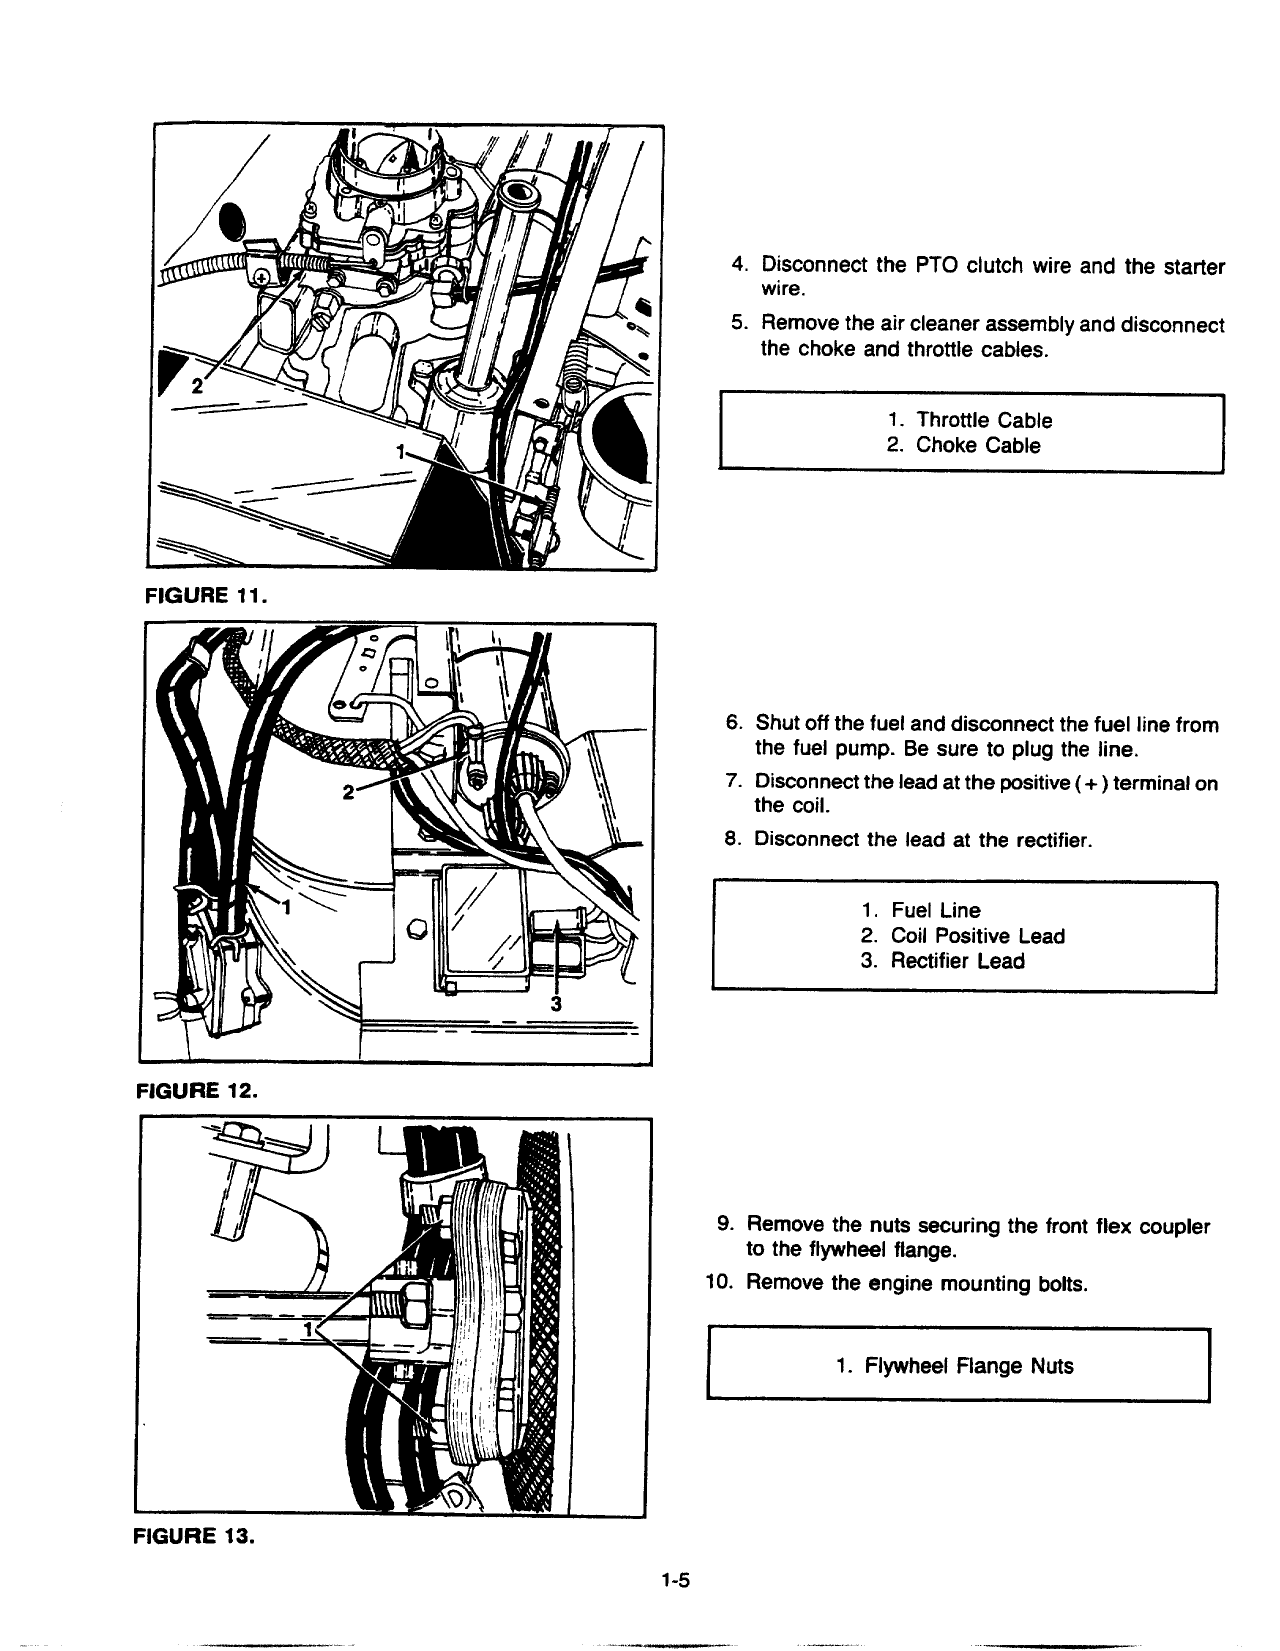 1985-1989 Cub Cadet™ Super GT 784, 1050, 1204, 1210, 1211, 1810, 1811, 1812 garden tractor manual Preview image 5